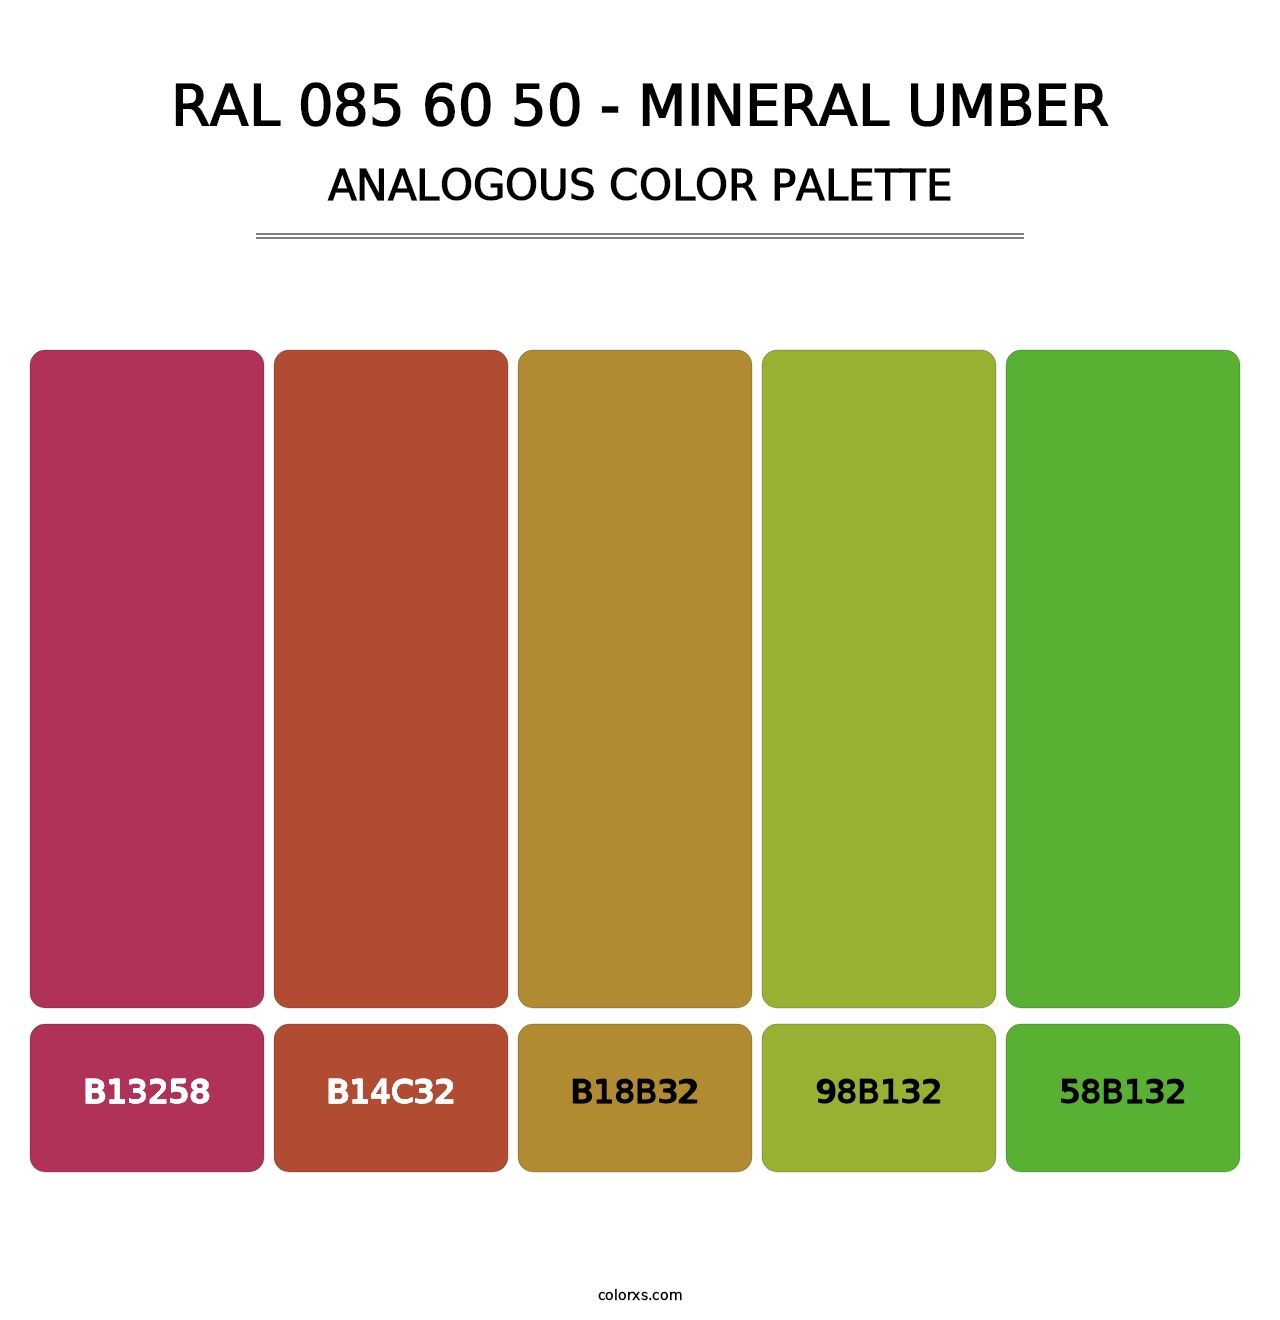 RAL 085 60 50 - Mineral Umber - Analogous Color Palette